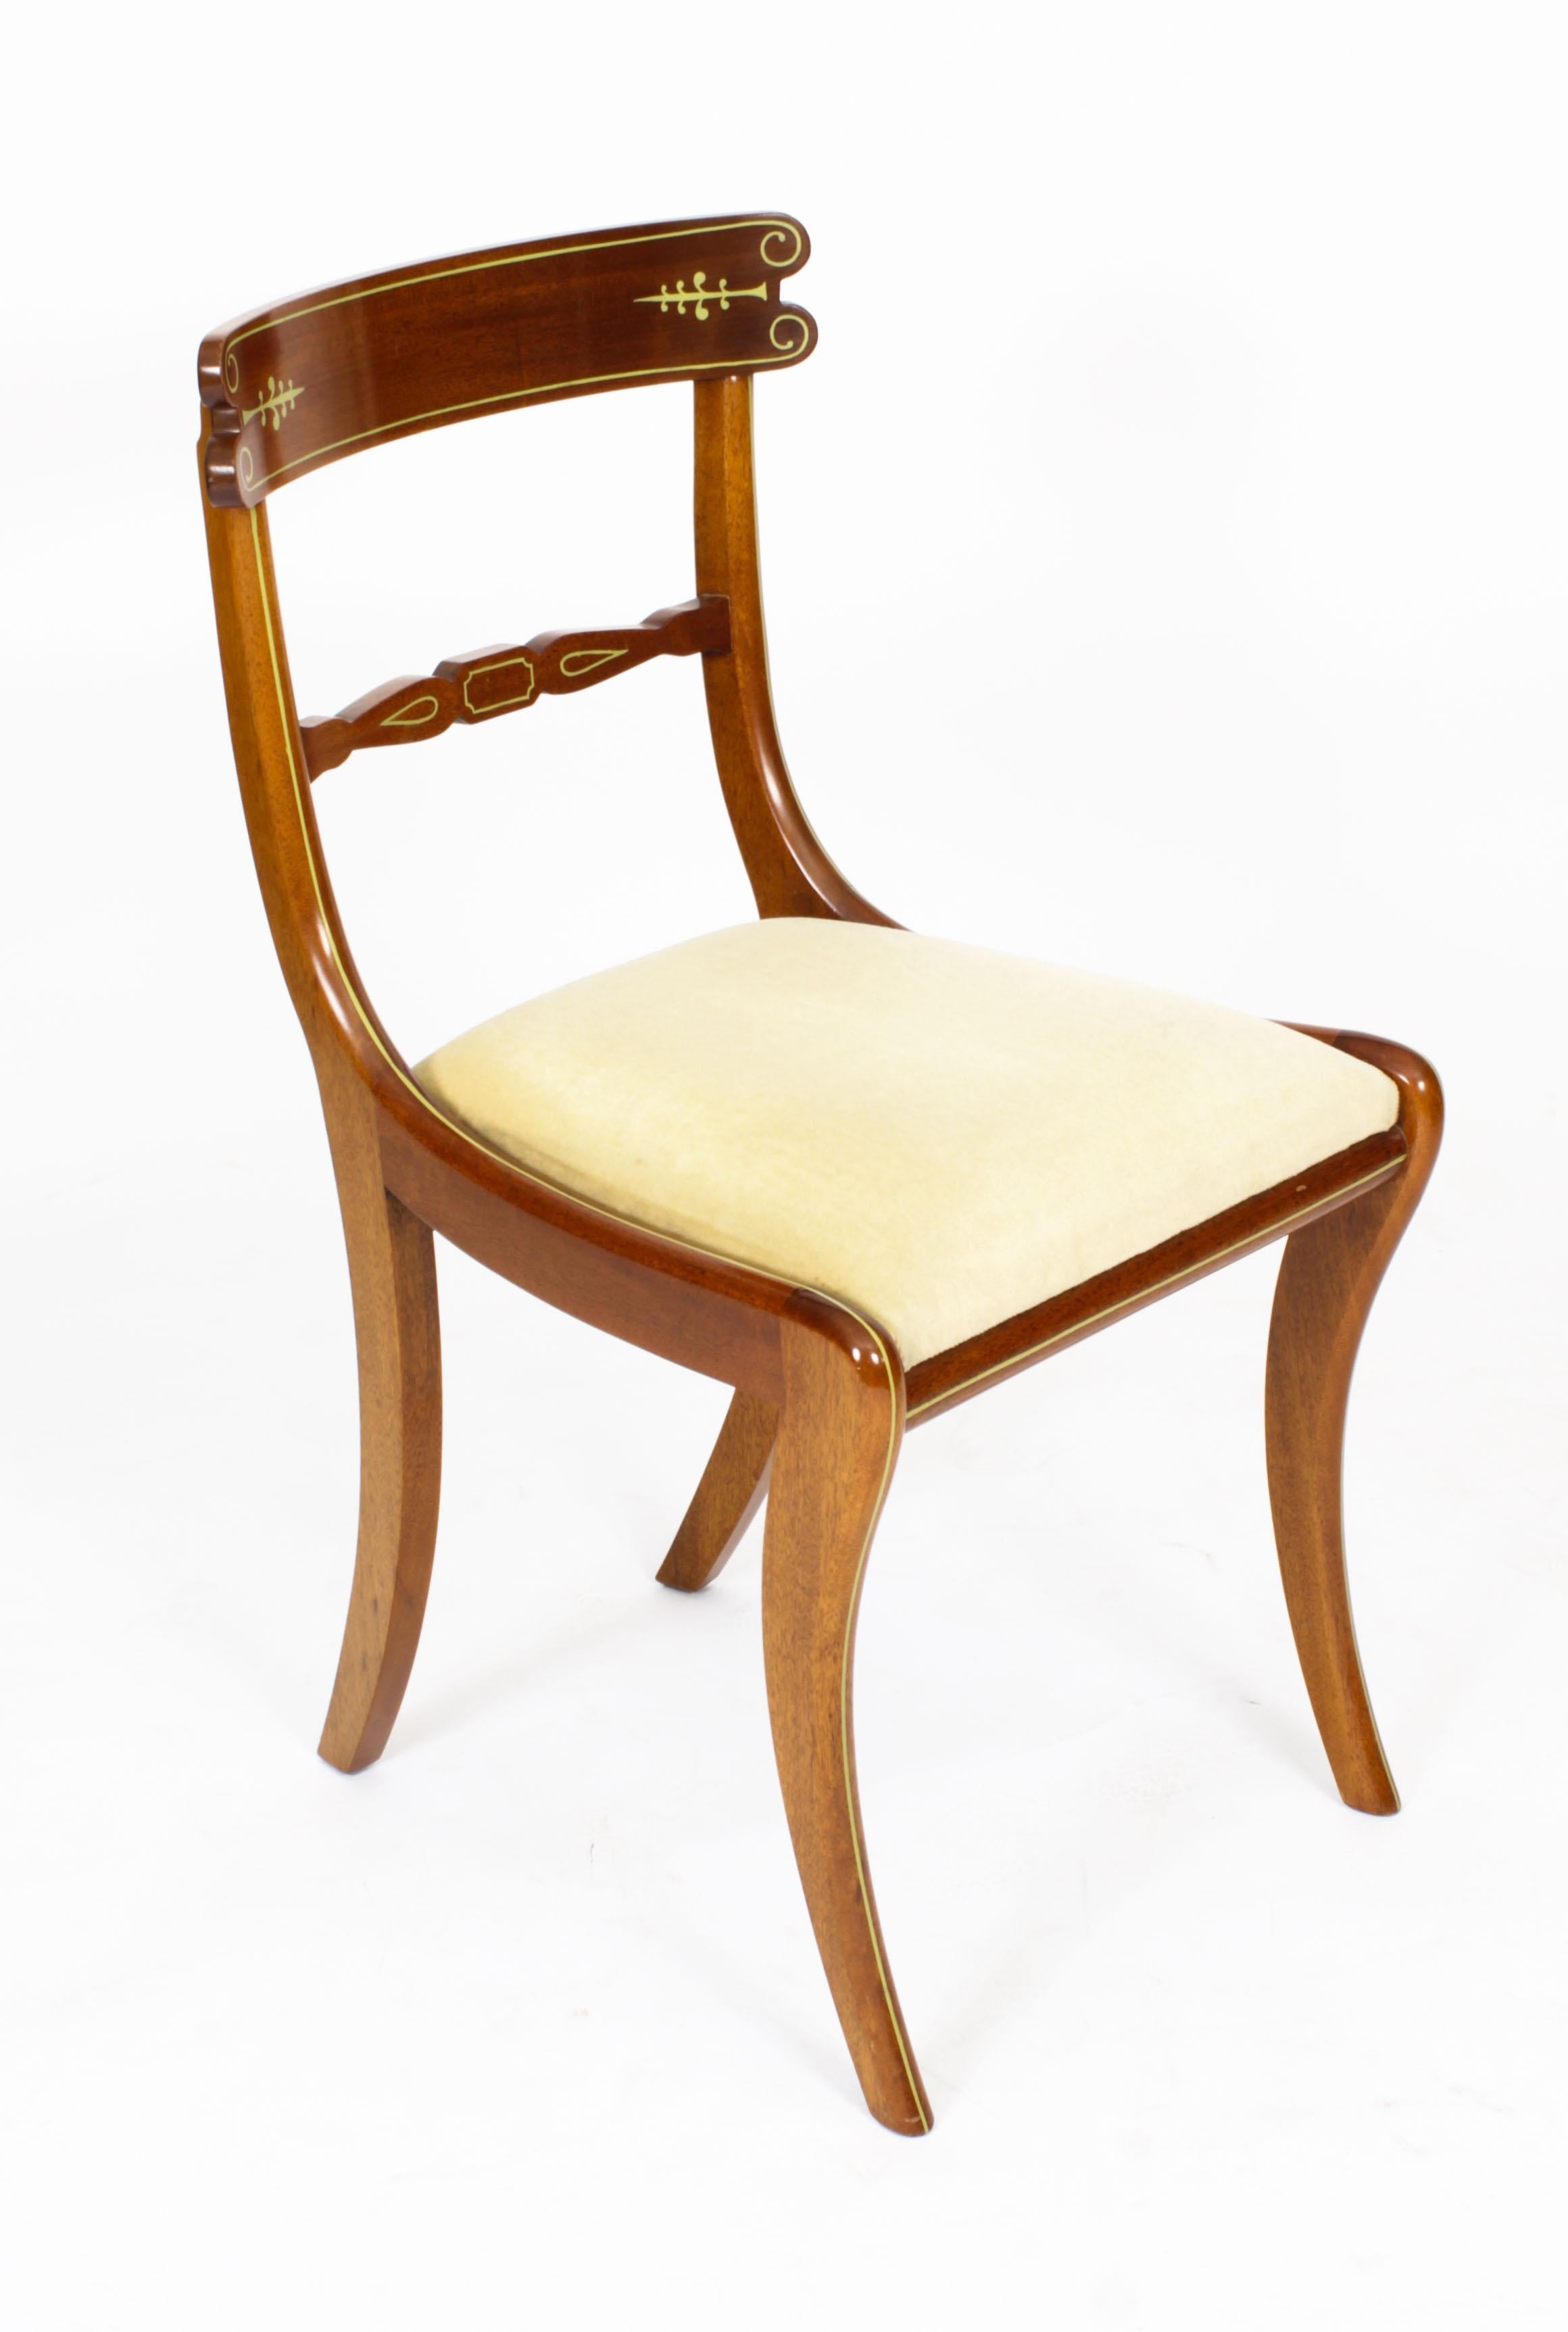 Vintage Regency Revival Side Desk Chair by William Tillman 20th C 8